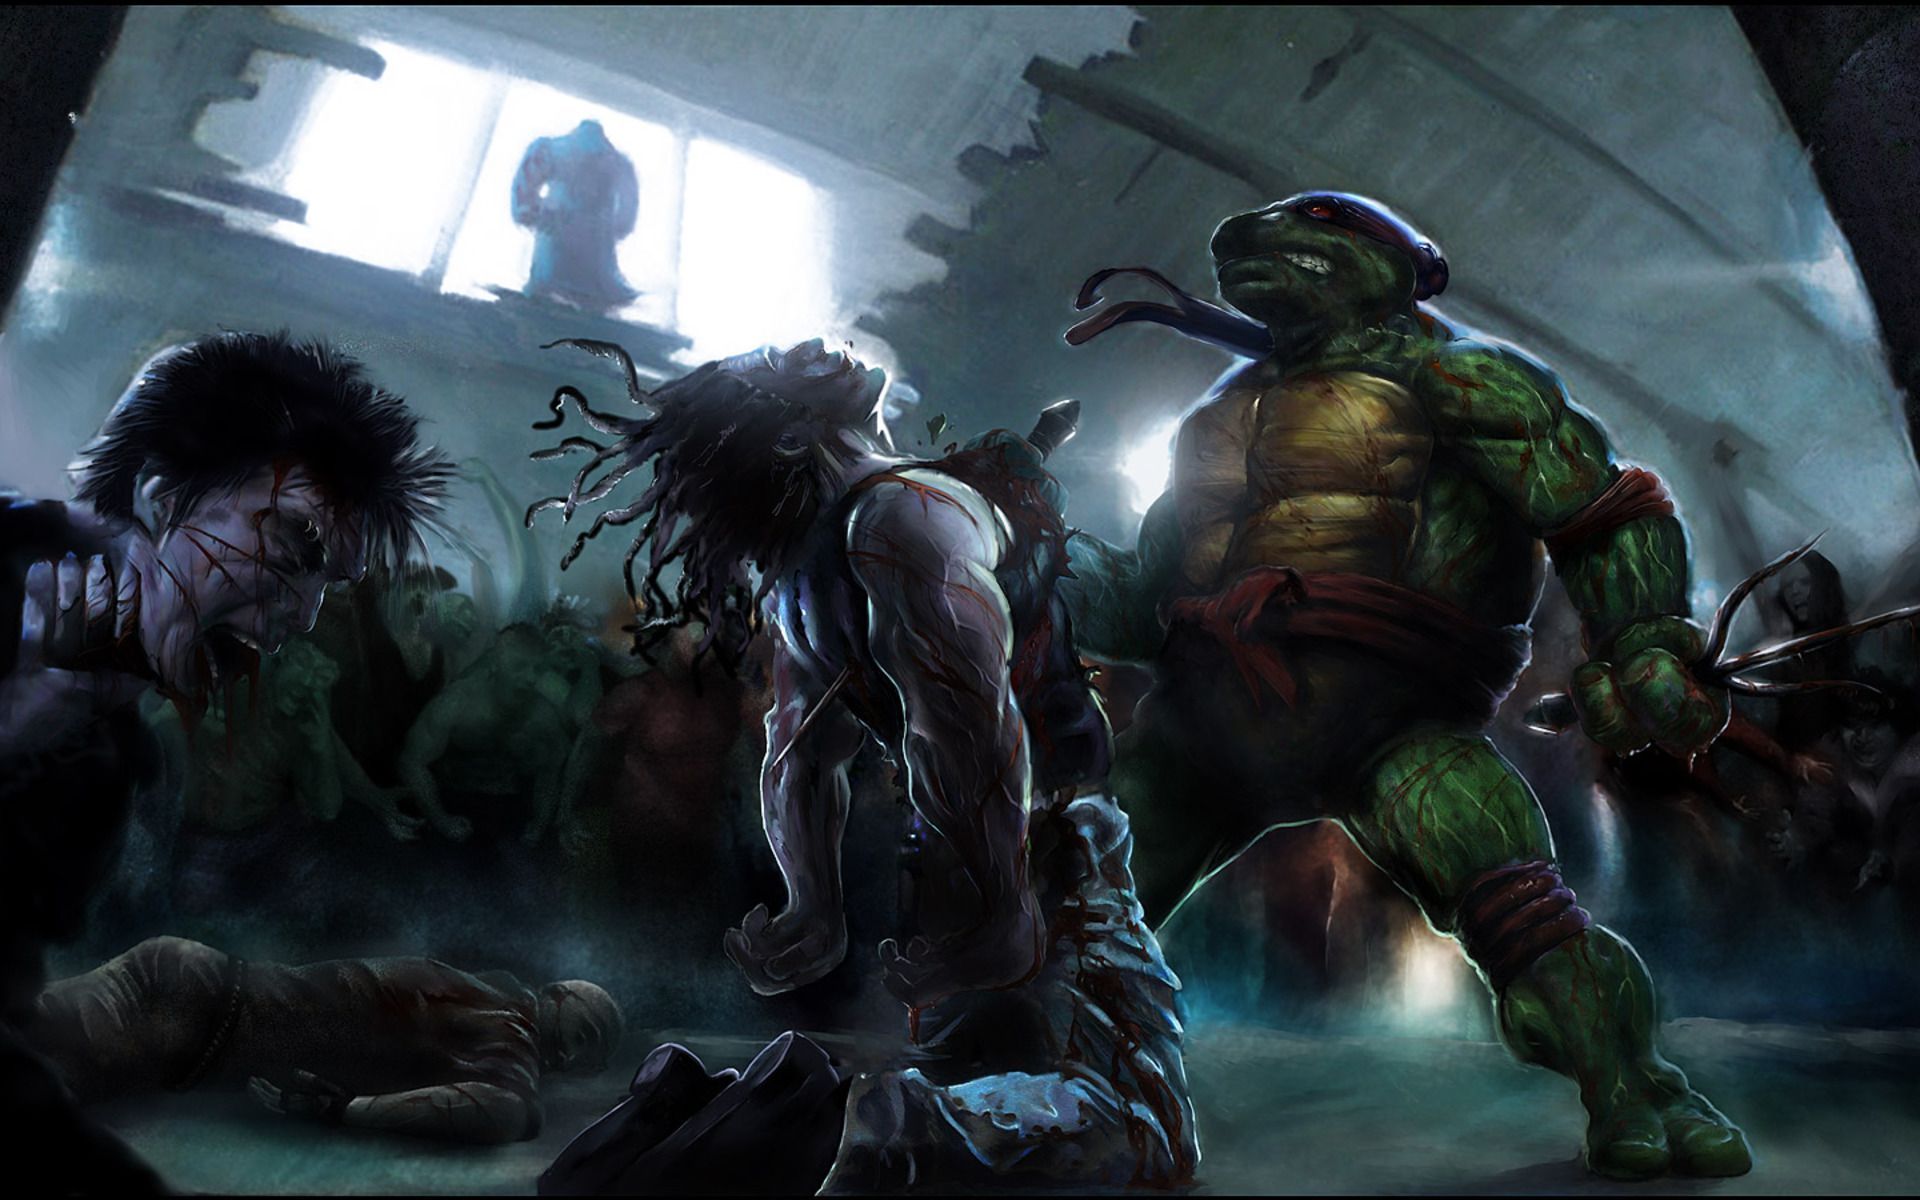 Teenage Mutant Ninja Turtles Wallpaper HD Background